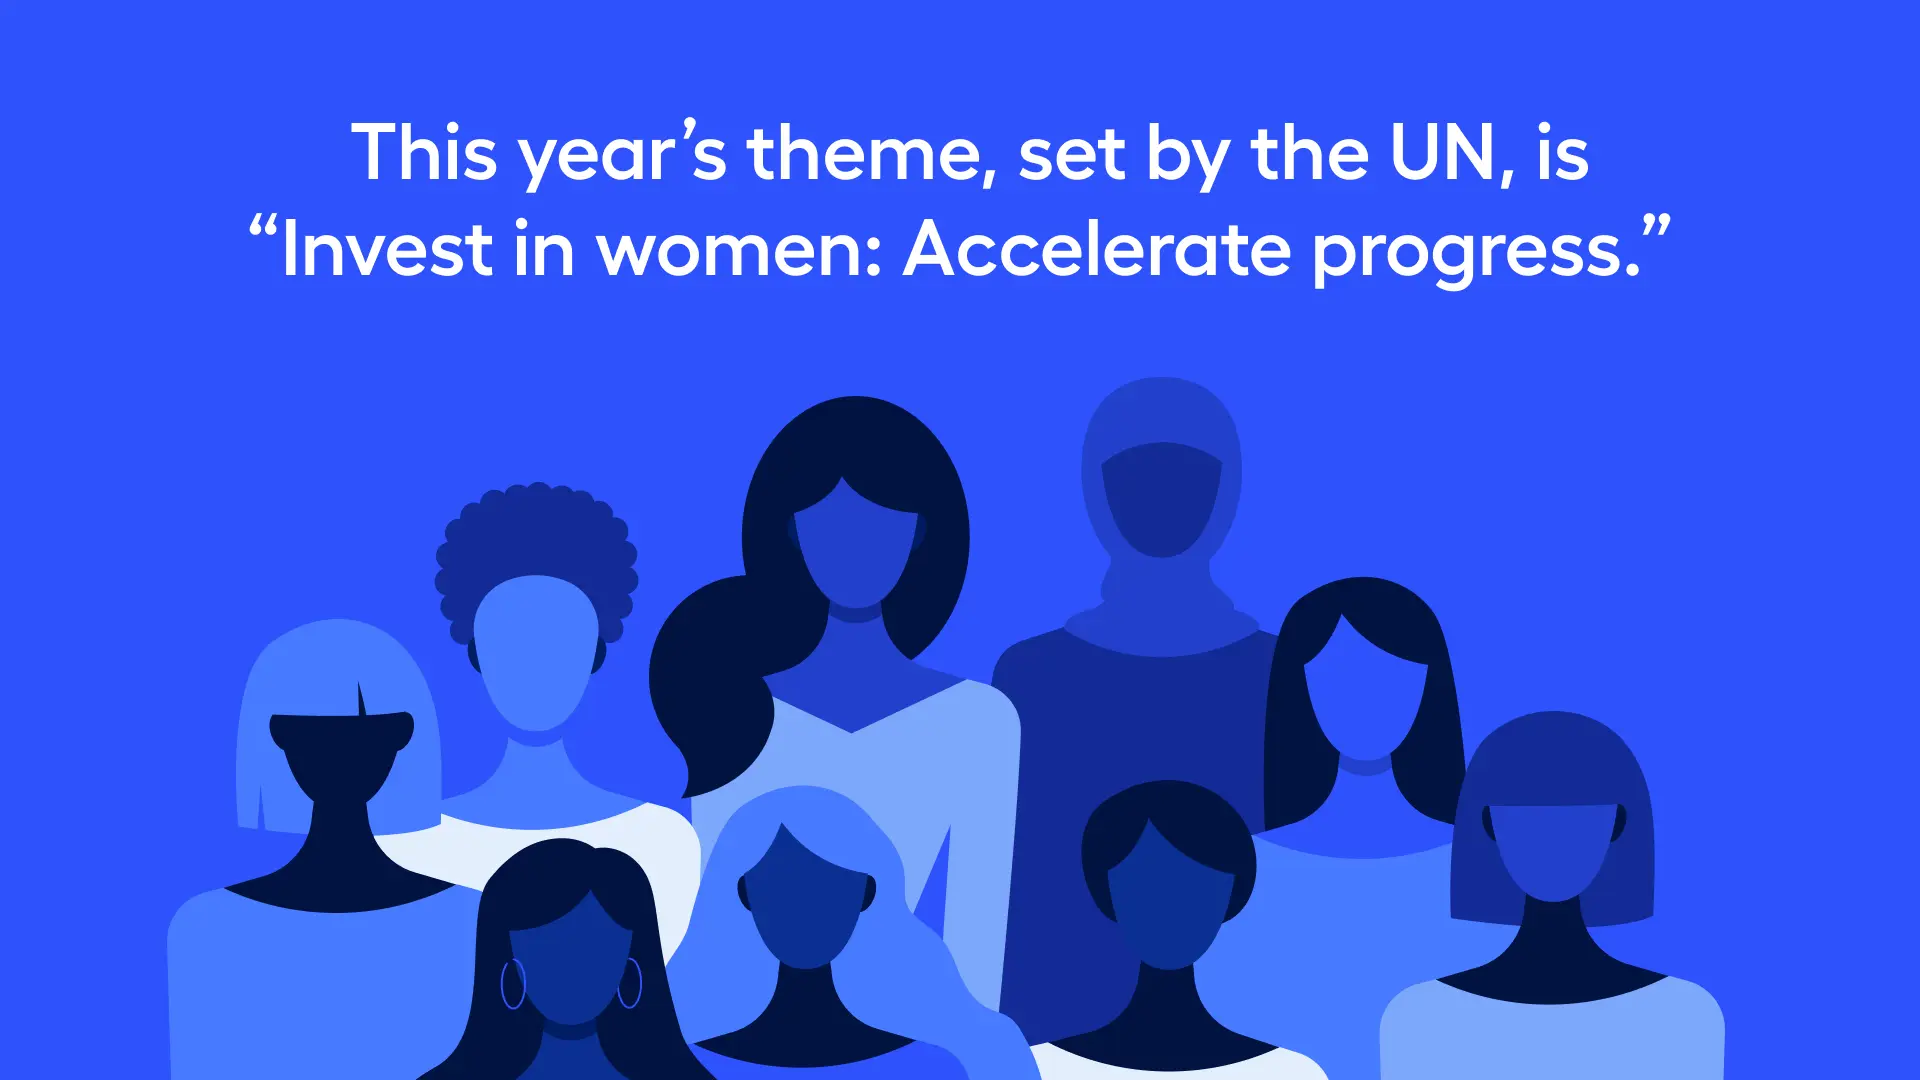 Invest in Women: Accelerate Progress